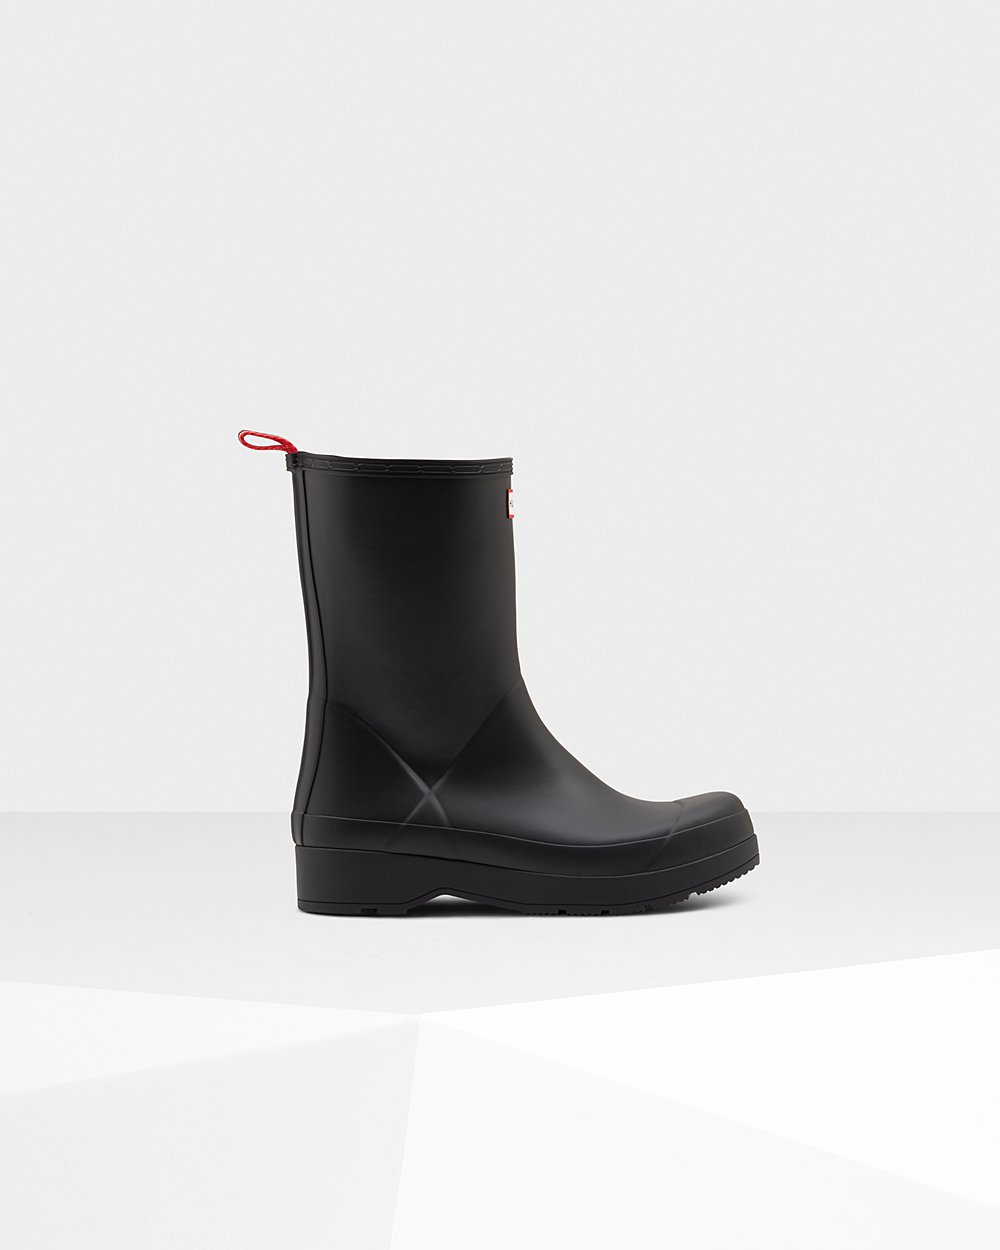 Mens Play Boots - Hunter Original Insulated Mid-Height Rain (54ZXCEWHS) - Black